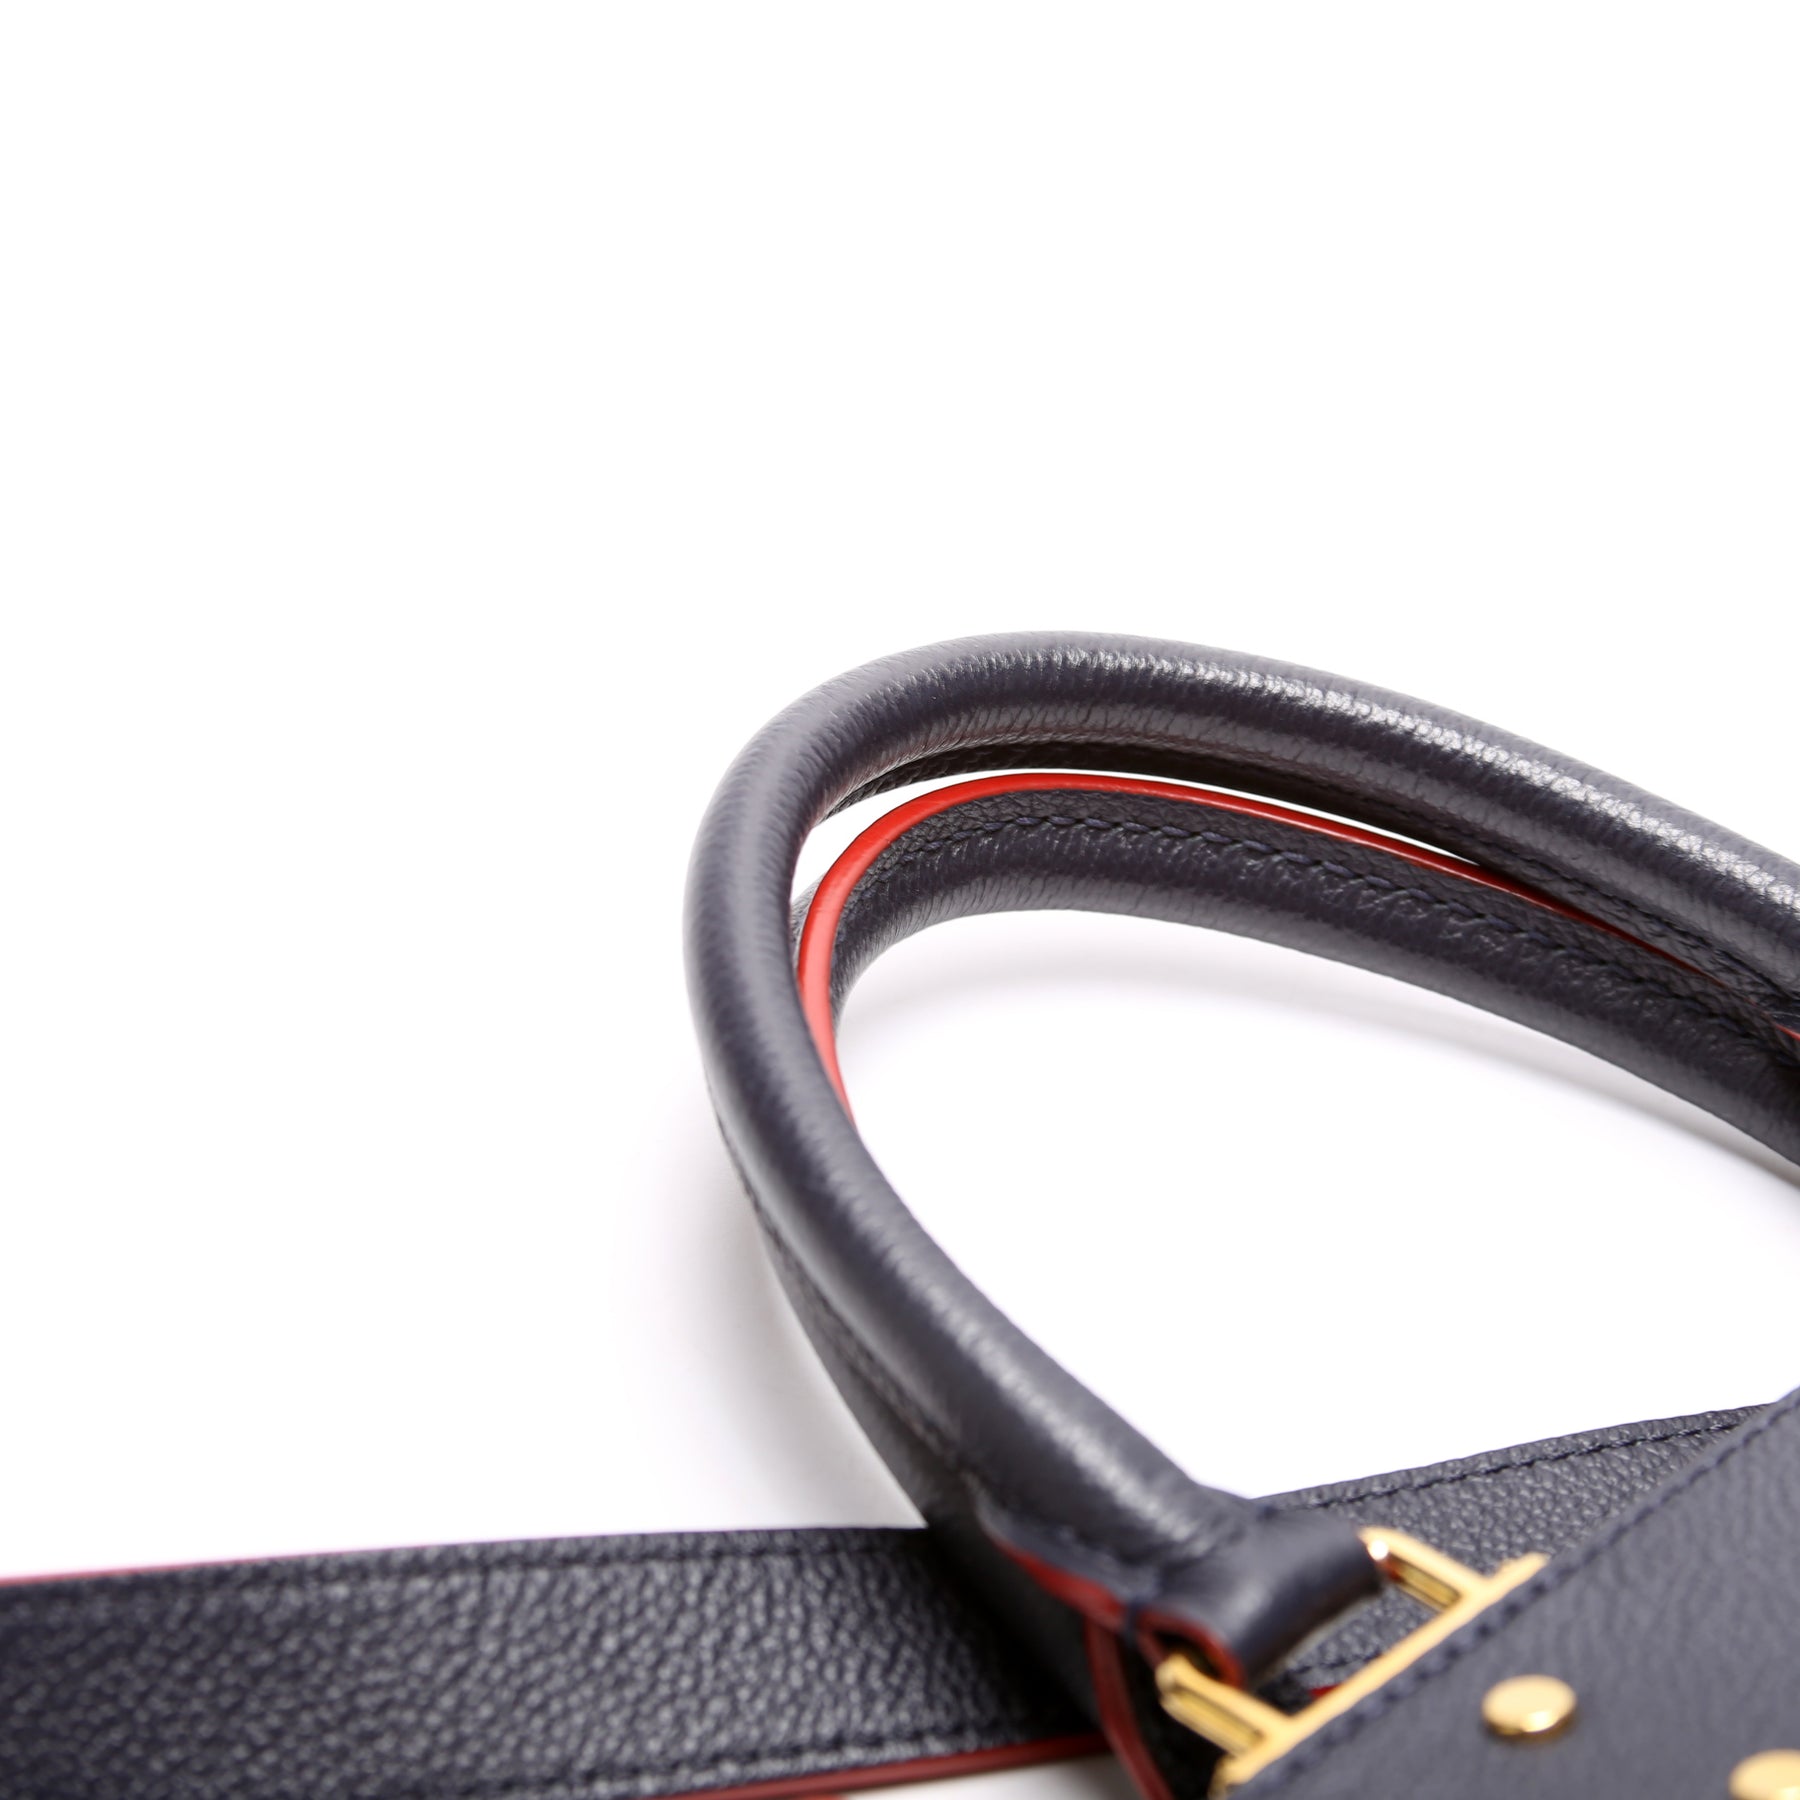 Sully PM Empreinte – Keeks Designer Handbags